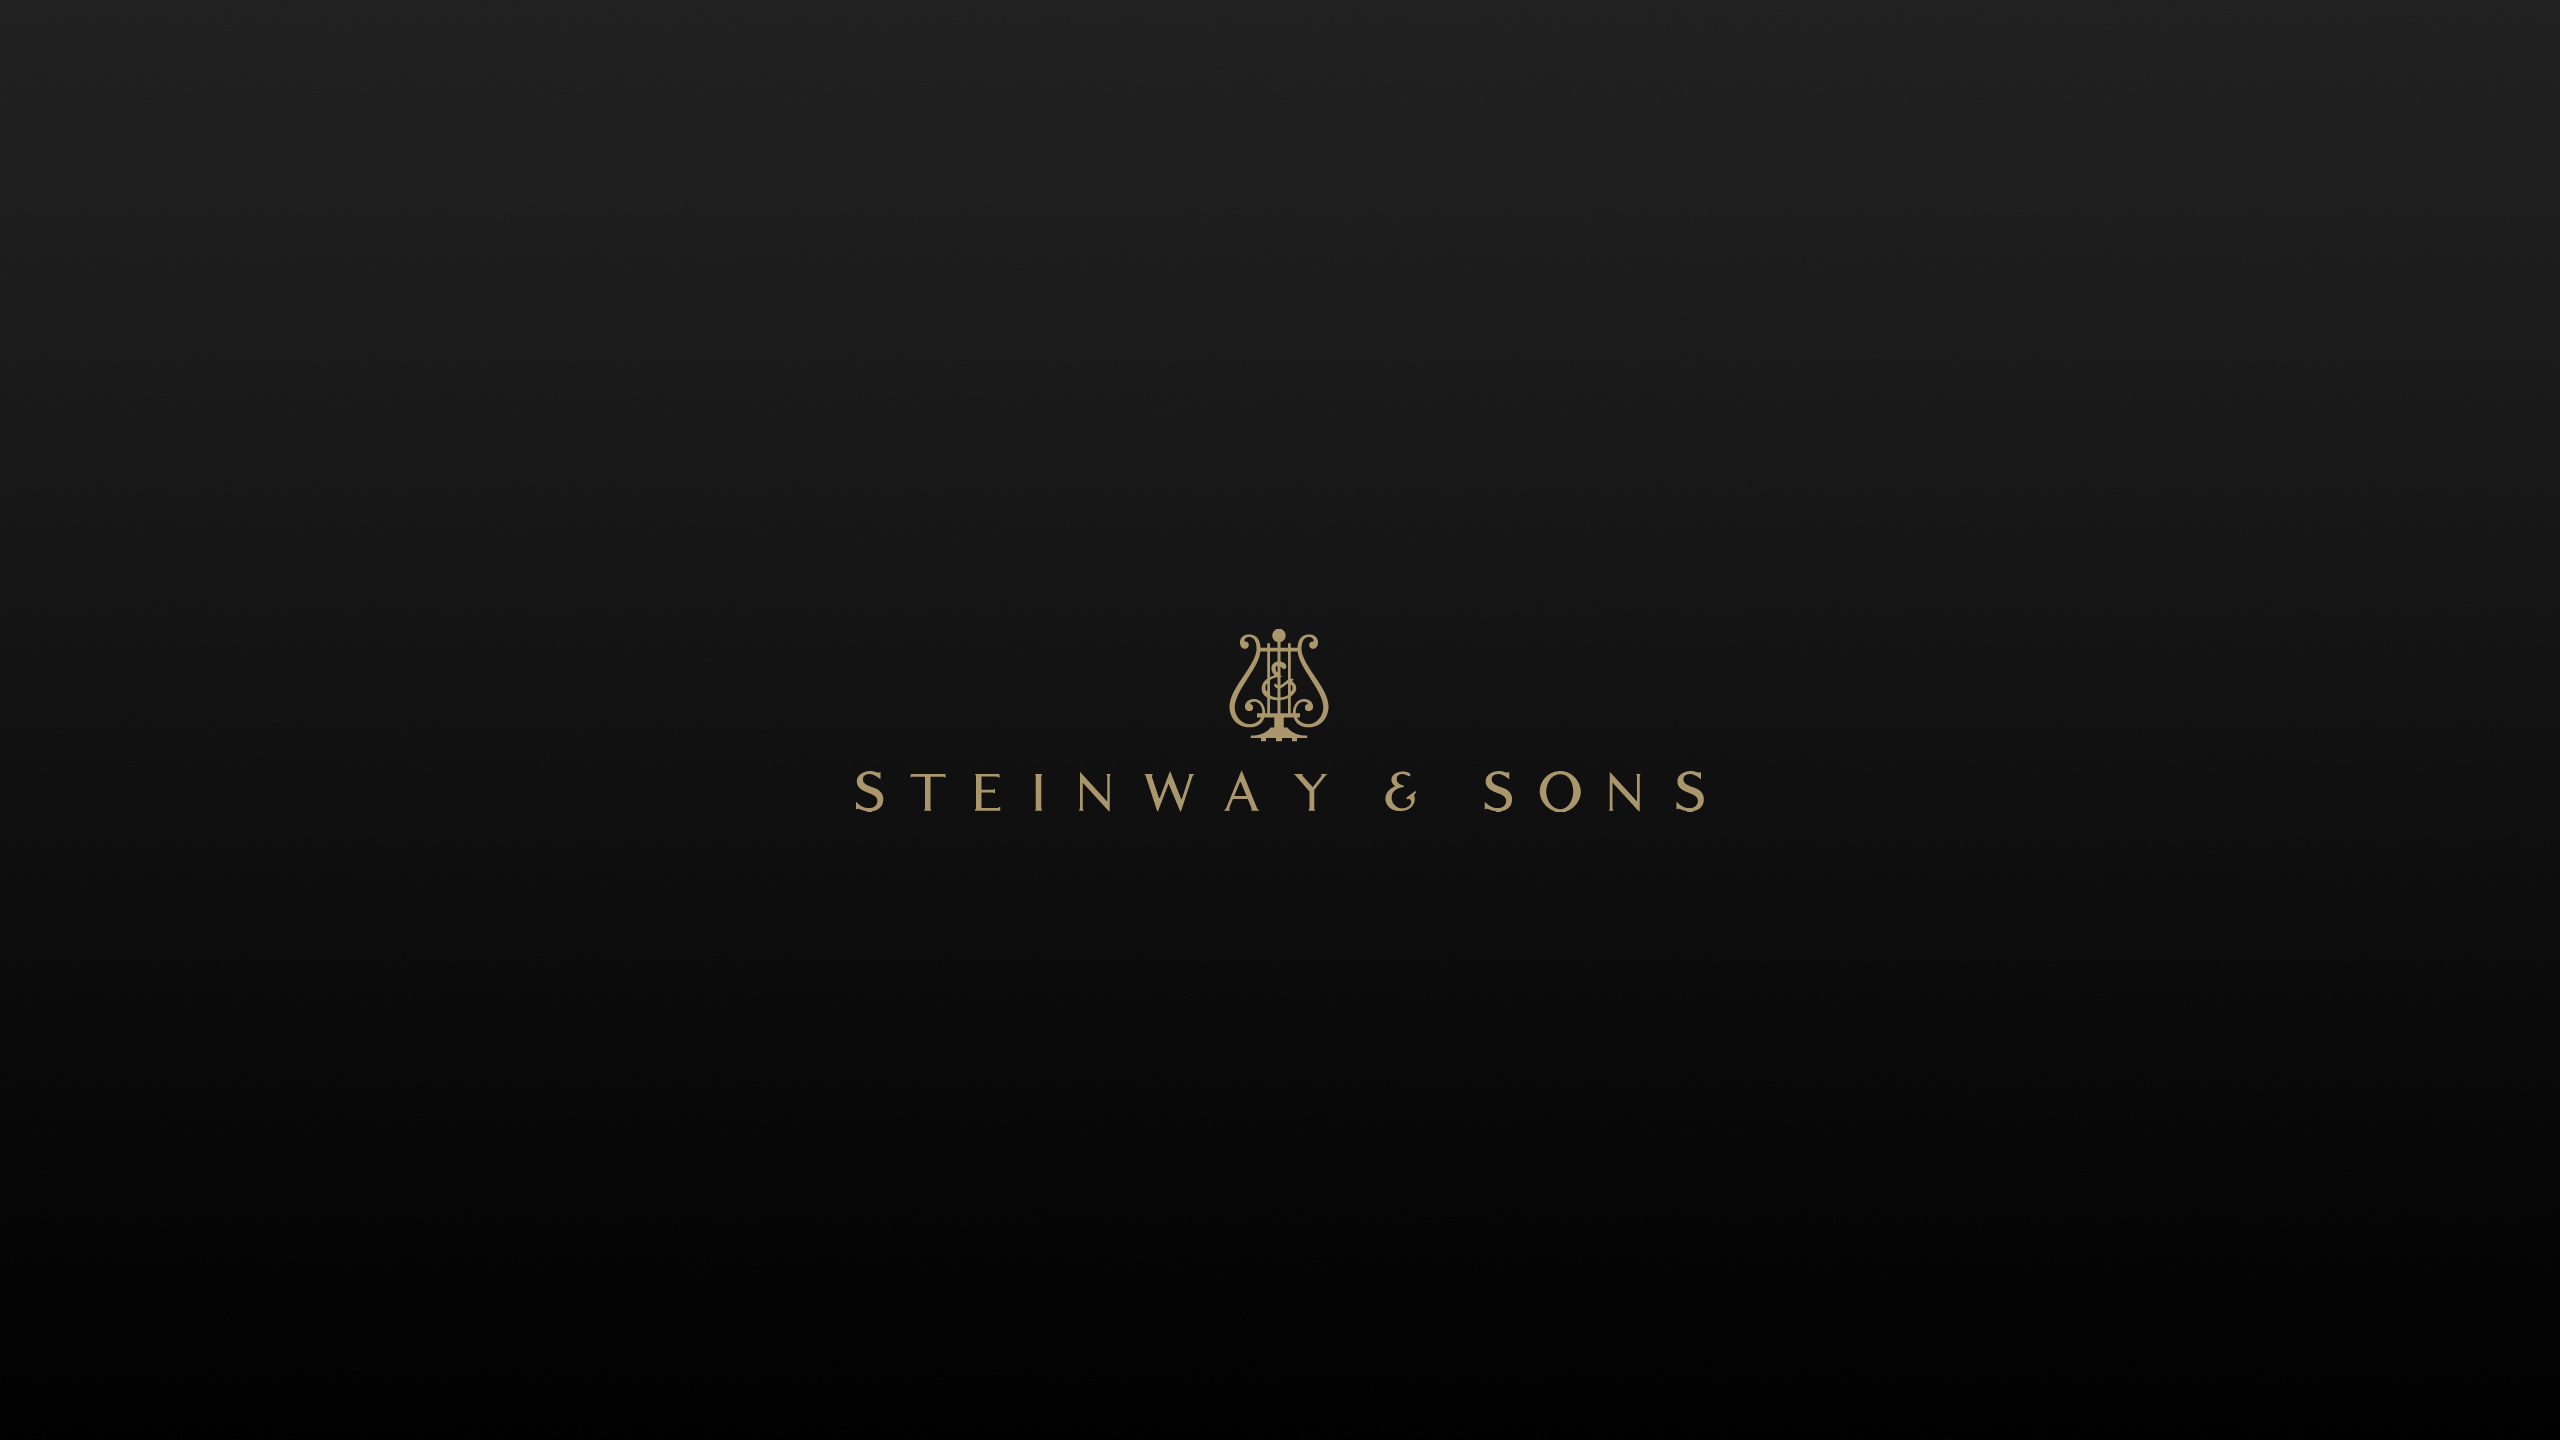 Steinway And Sons By Simpledesktopwalls